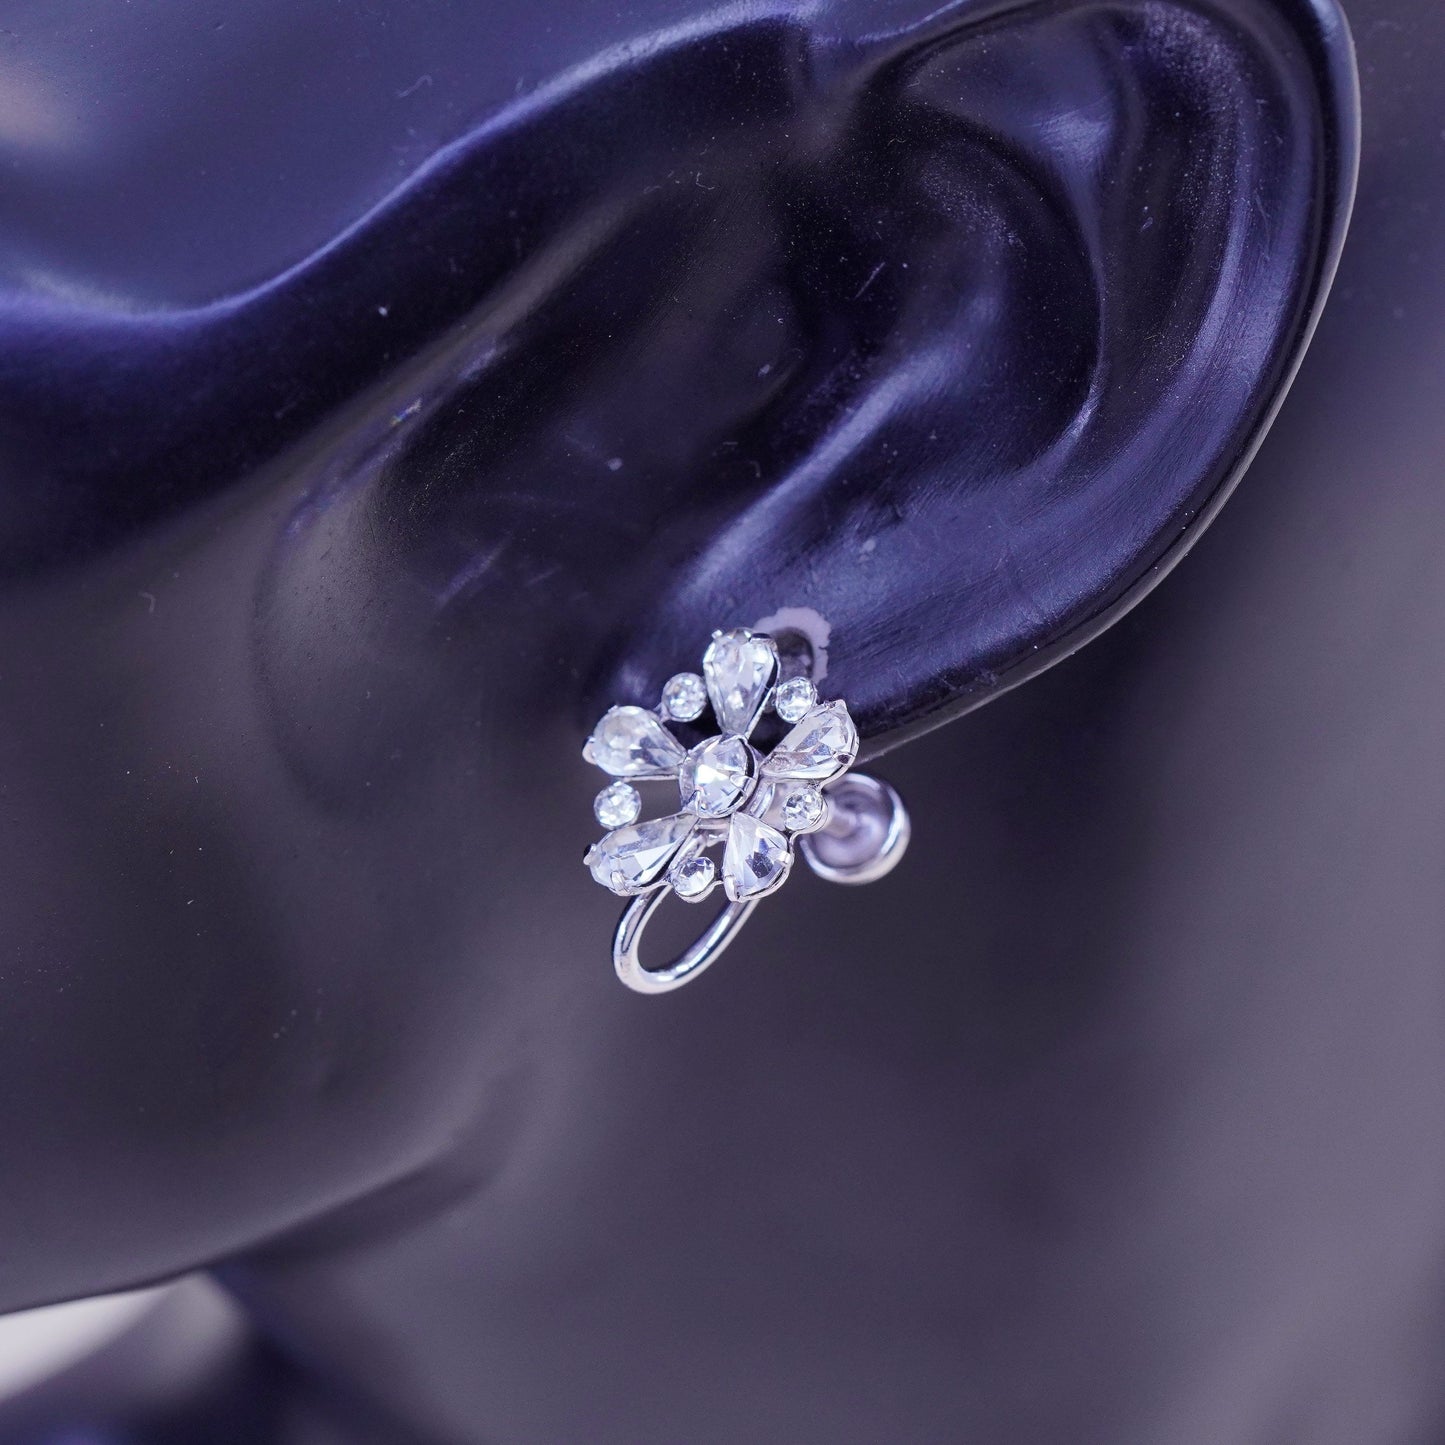 1950s vtg sterling 925 silver earrings flower screw back earrings rhinestone